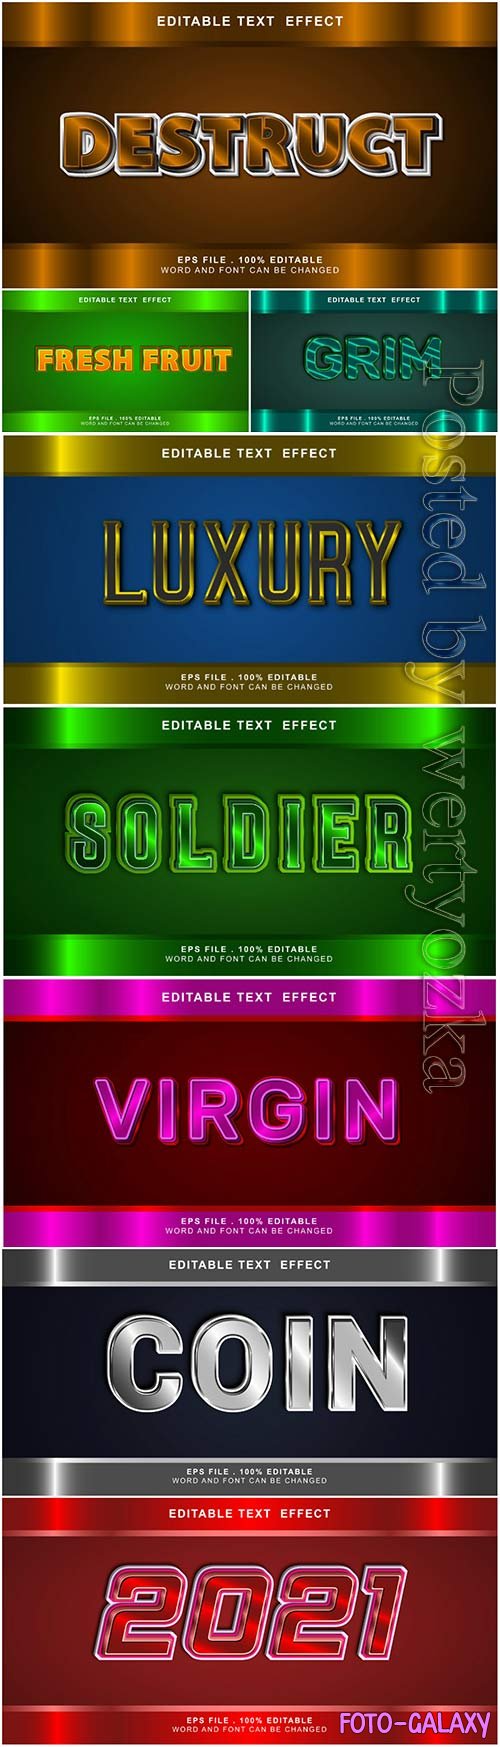 3d editable text style effect vector vol 2